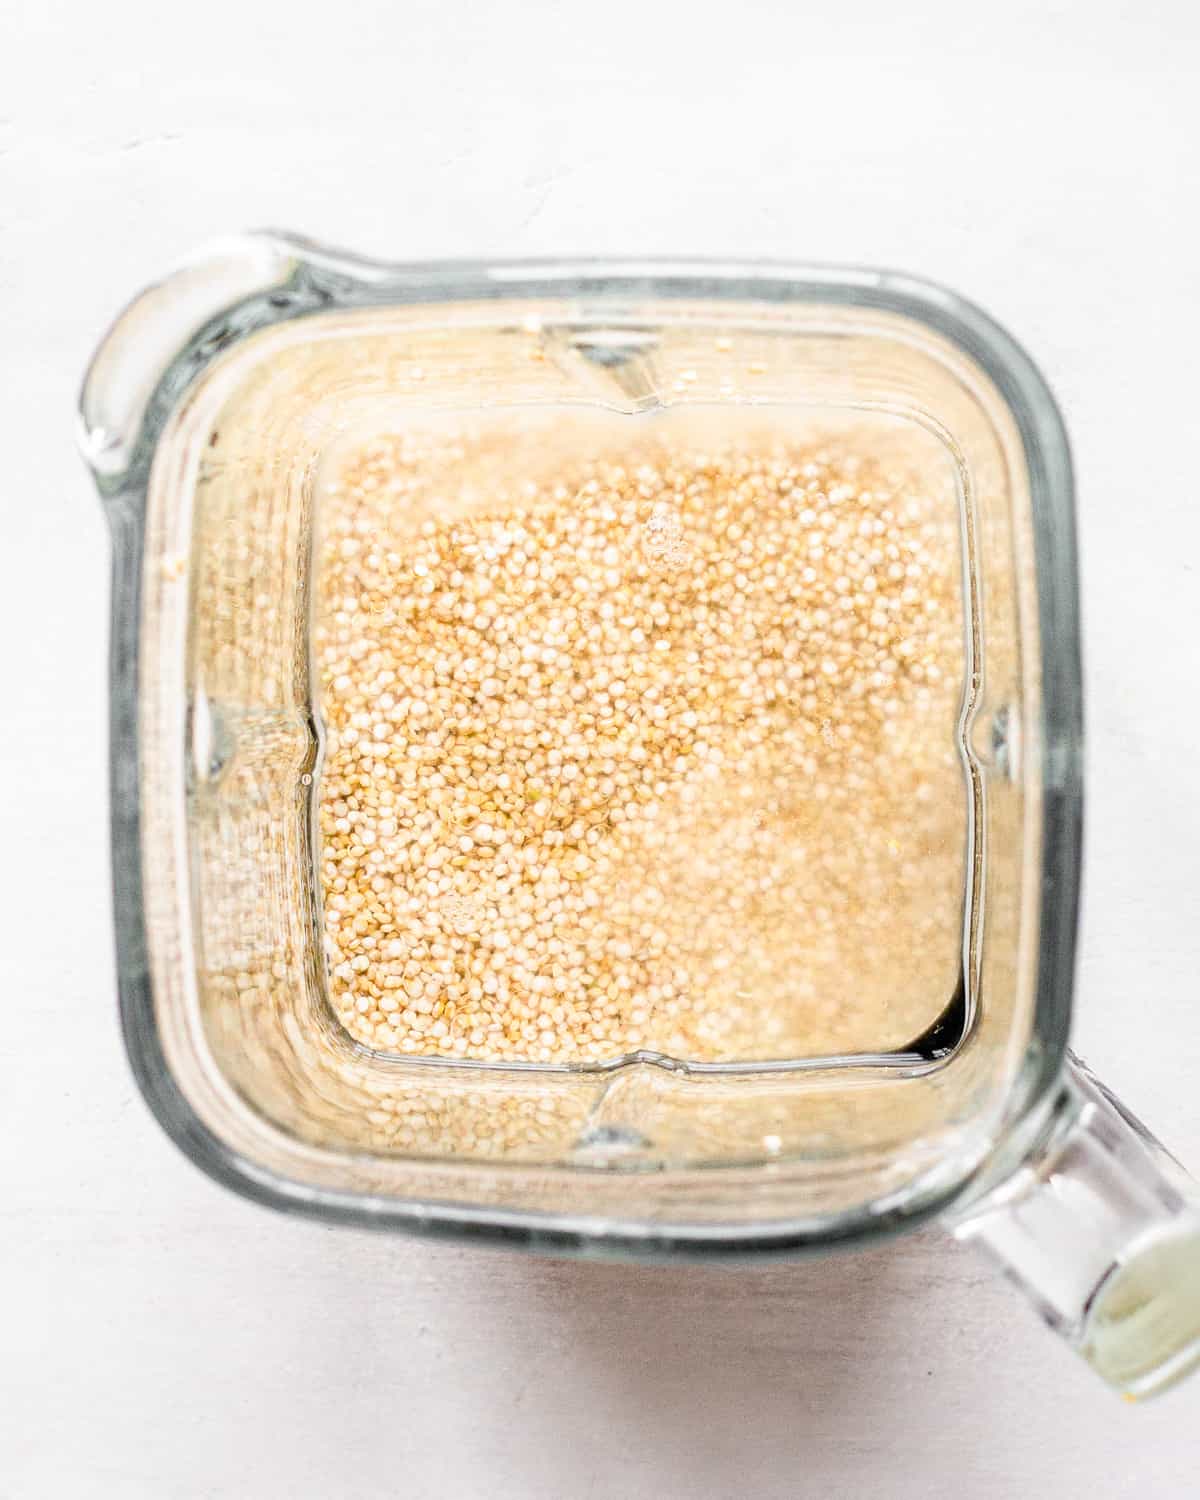 White quinoa, salt and water in a glass blender jar.